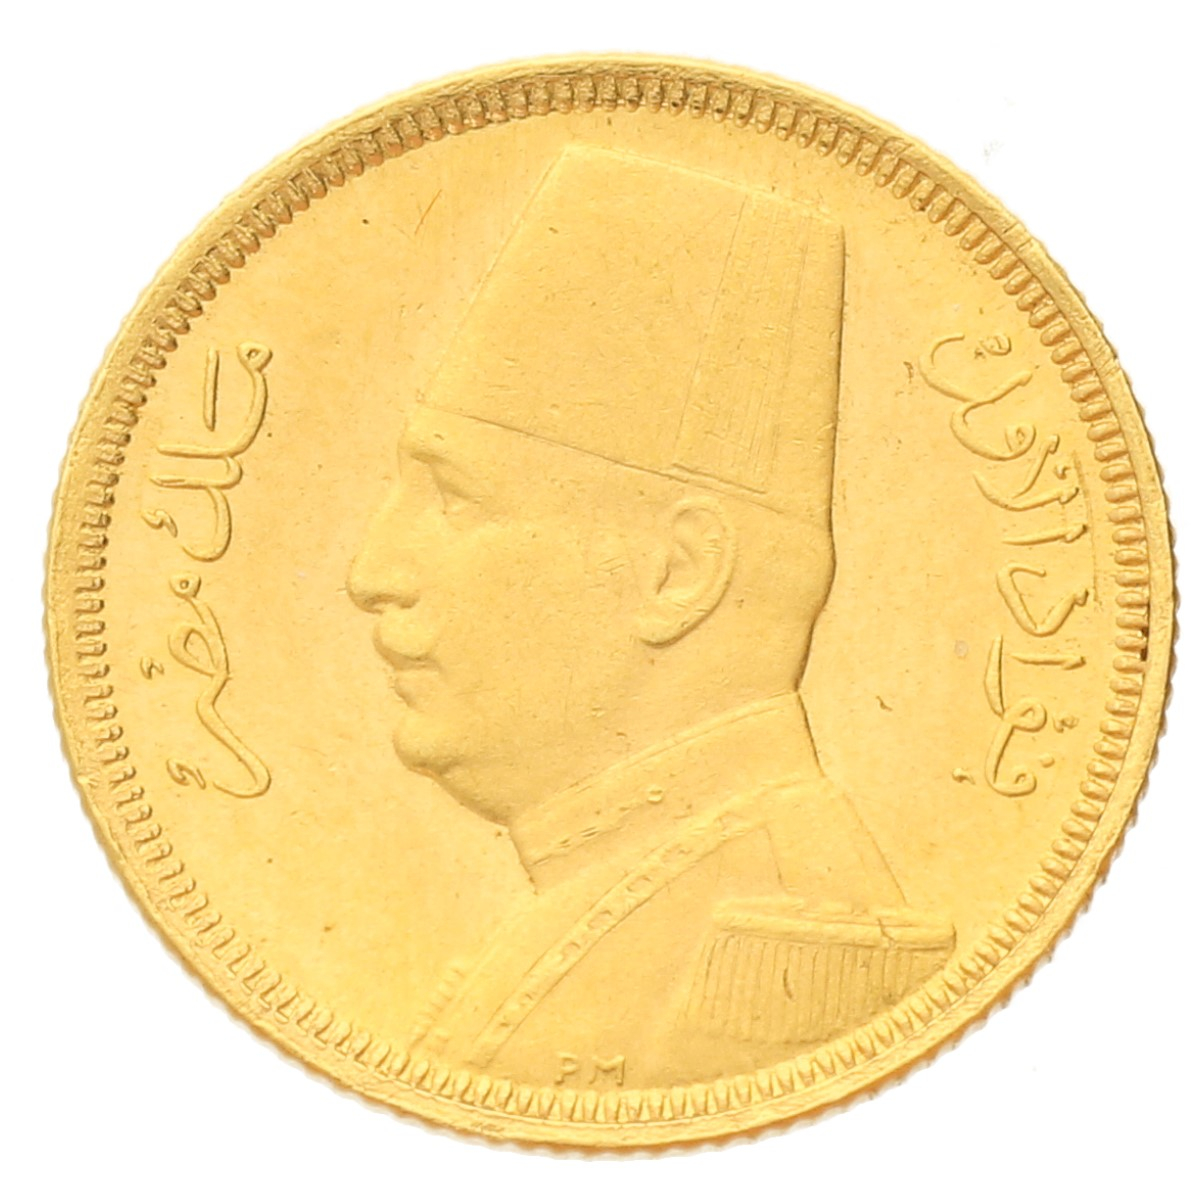 Egypt - 20 piastres (qirsh) 1929 - Fuad I